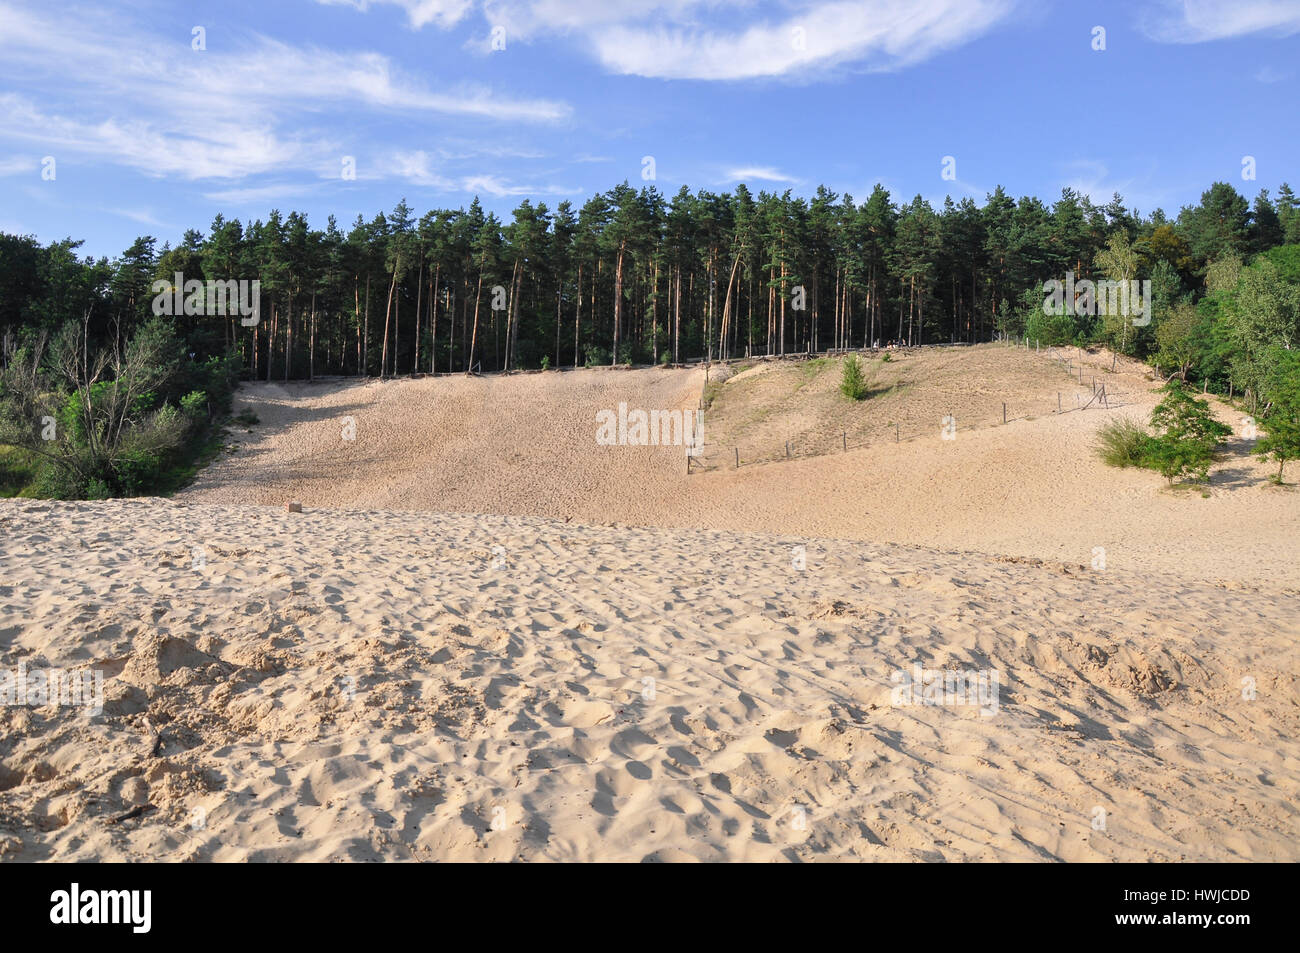 Dune de sable, Berlin-Grunewald Grunewald, paysage protégé, Jagen 86, Berlin, Allemagne Banque D'Images